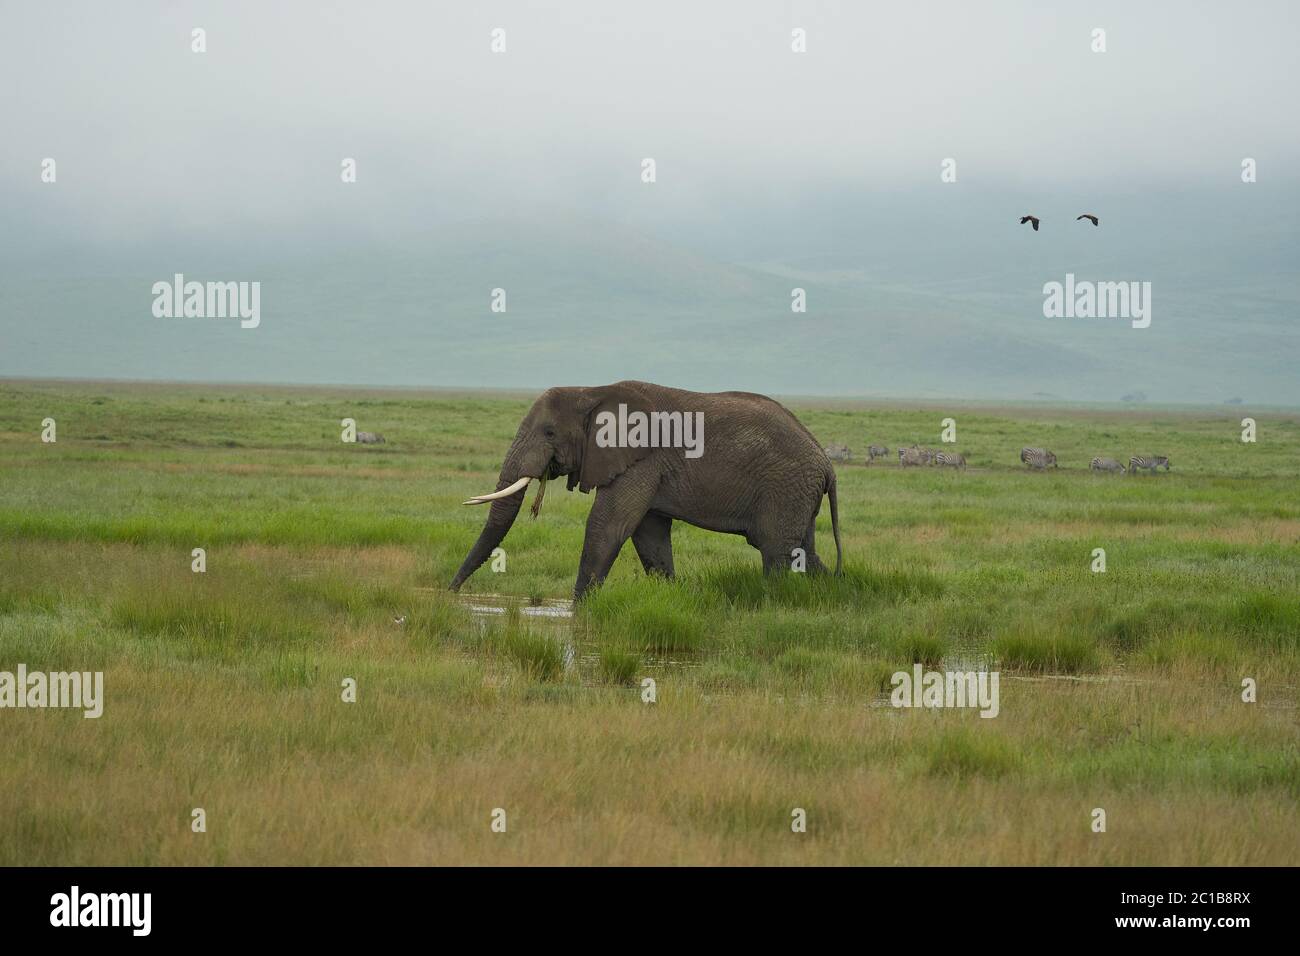 Elefant großer riesiger Tusker Amboseli - große fünf Safari -Baby afrikanischer Buschelefant Loxodonta africana Stockfoto